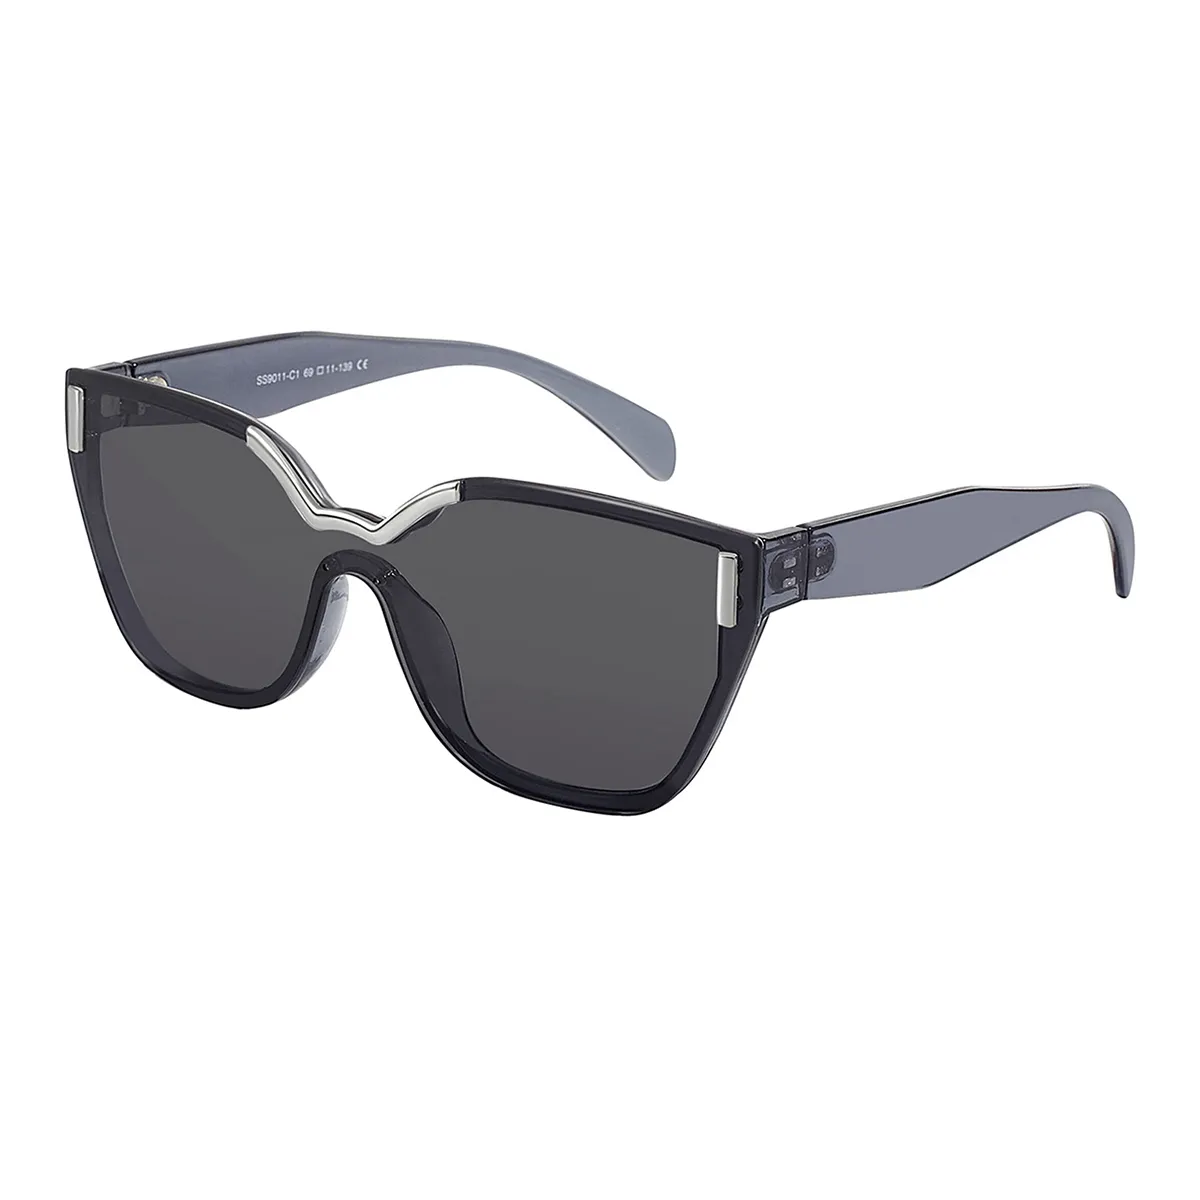 Wanda - Geometric Black Sunglasses for Women